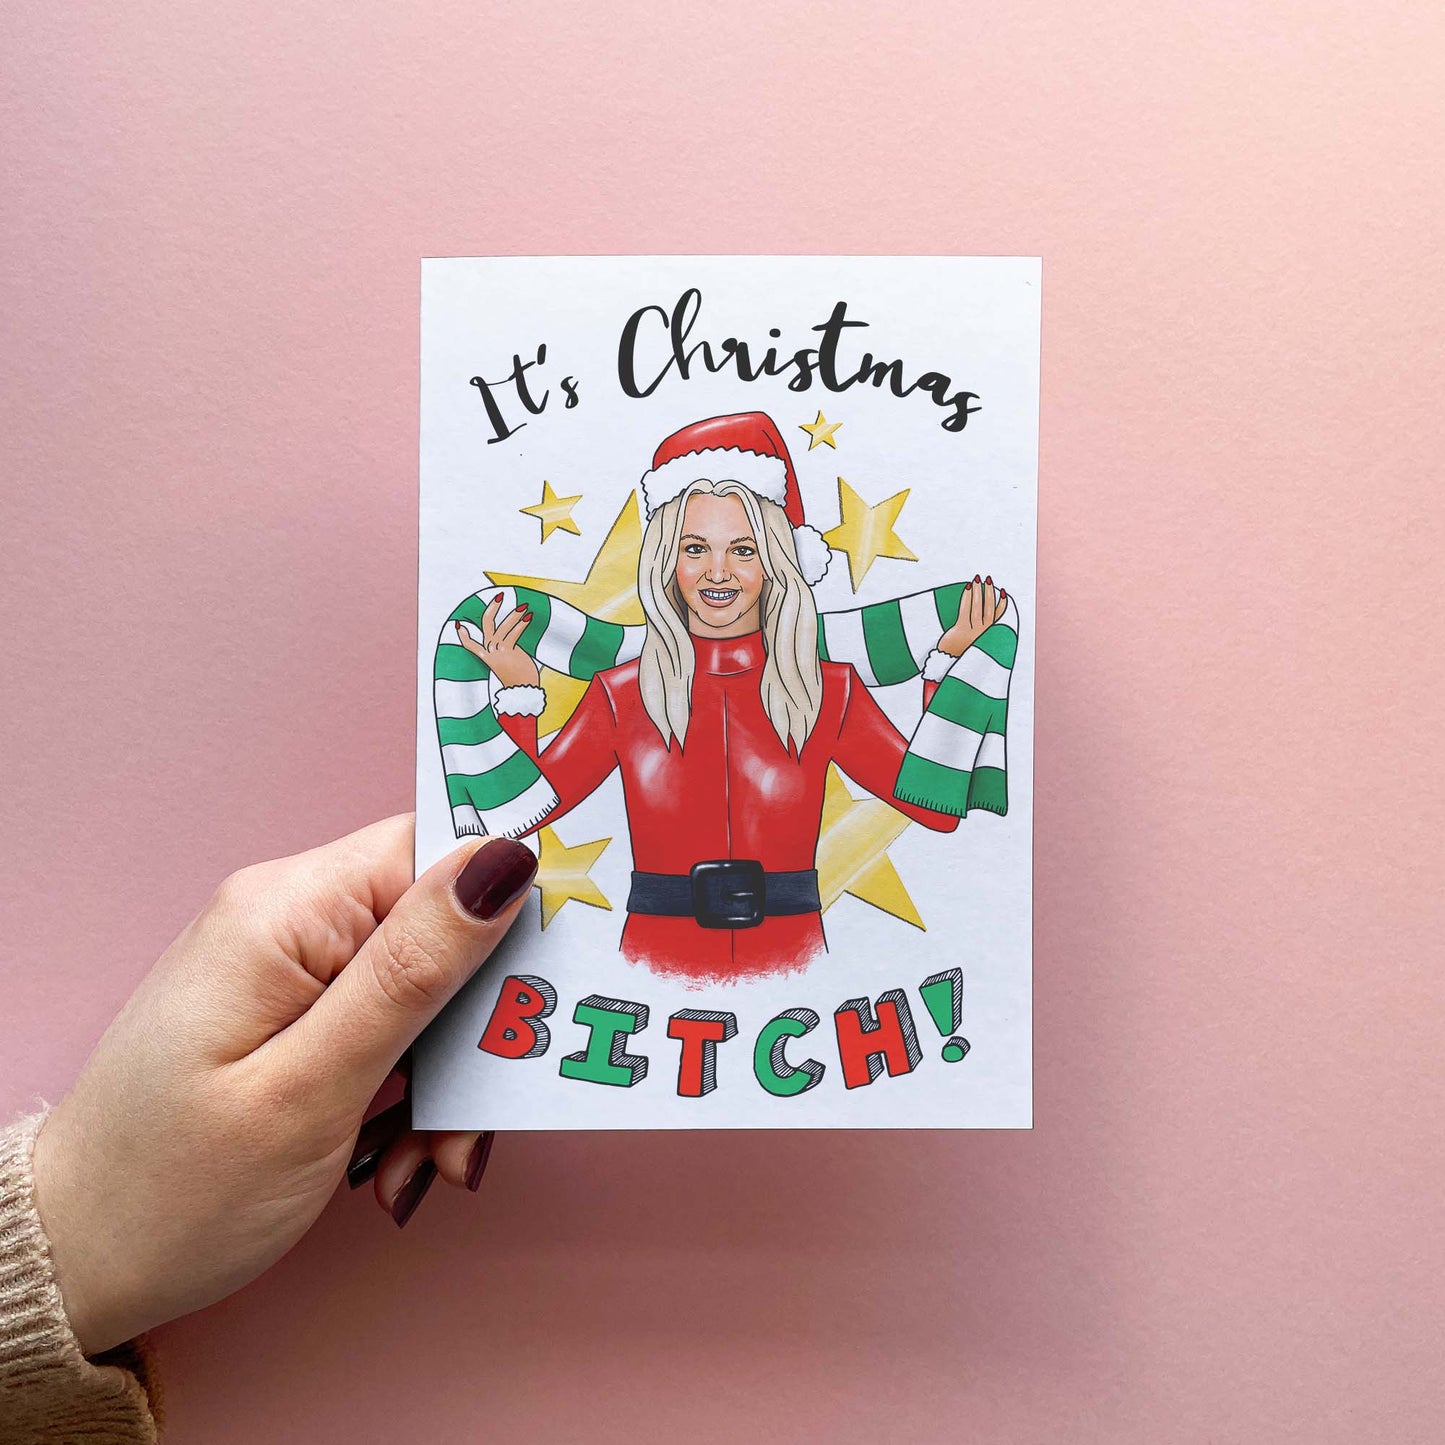 It's Christmas B*tch! - Funny Xmas Greeting Card